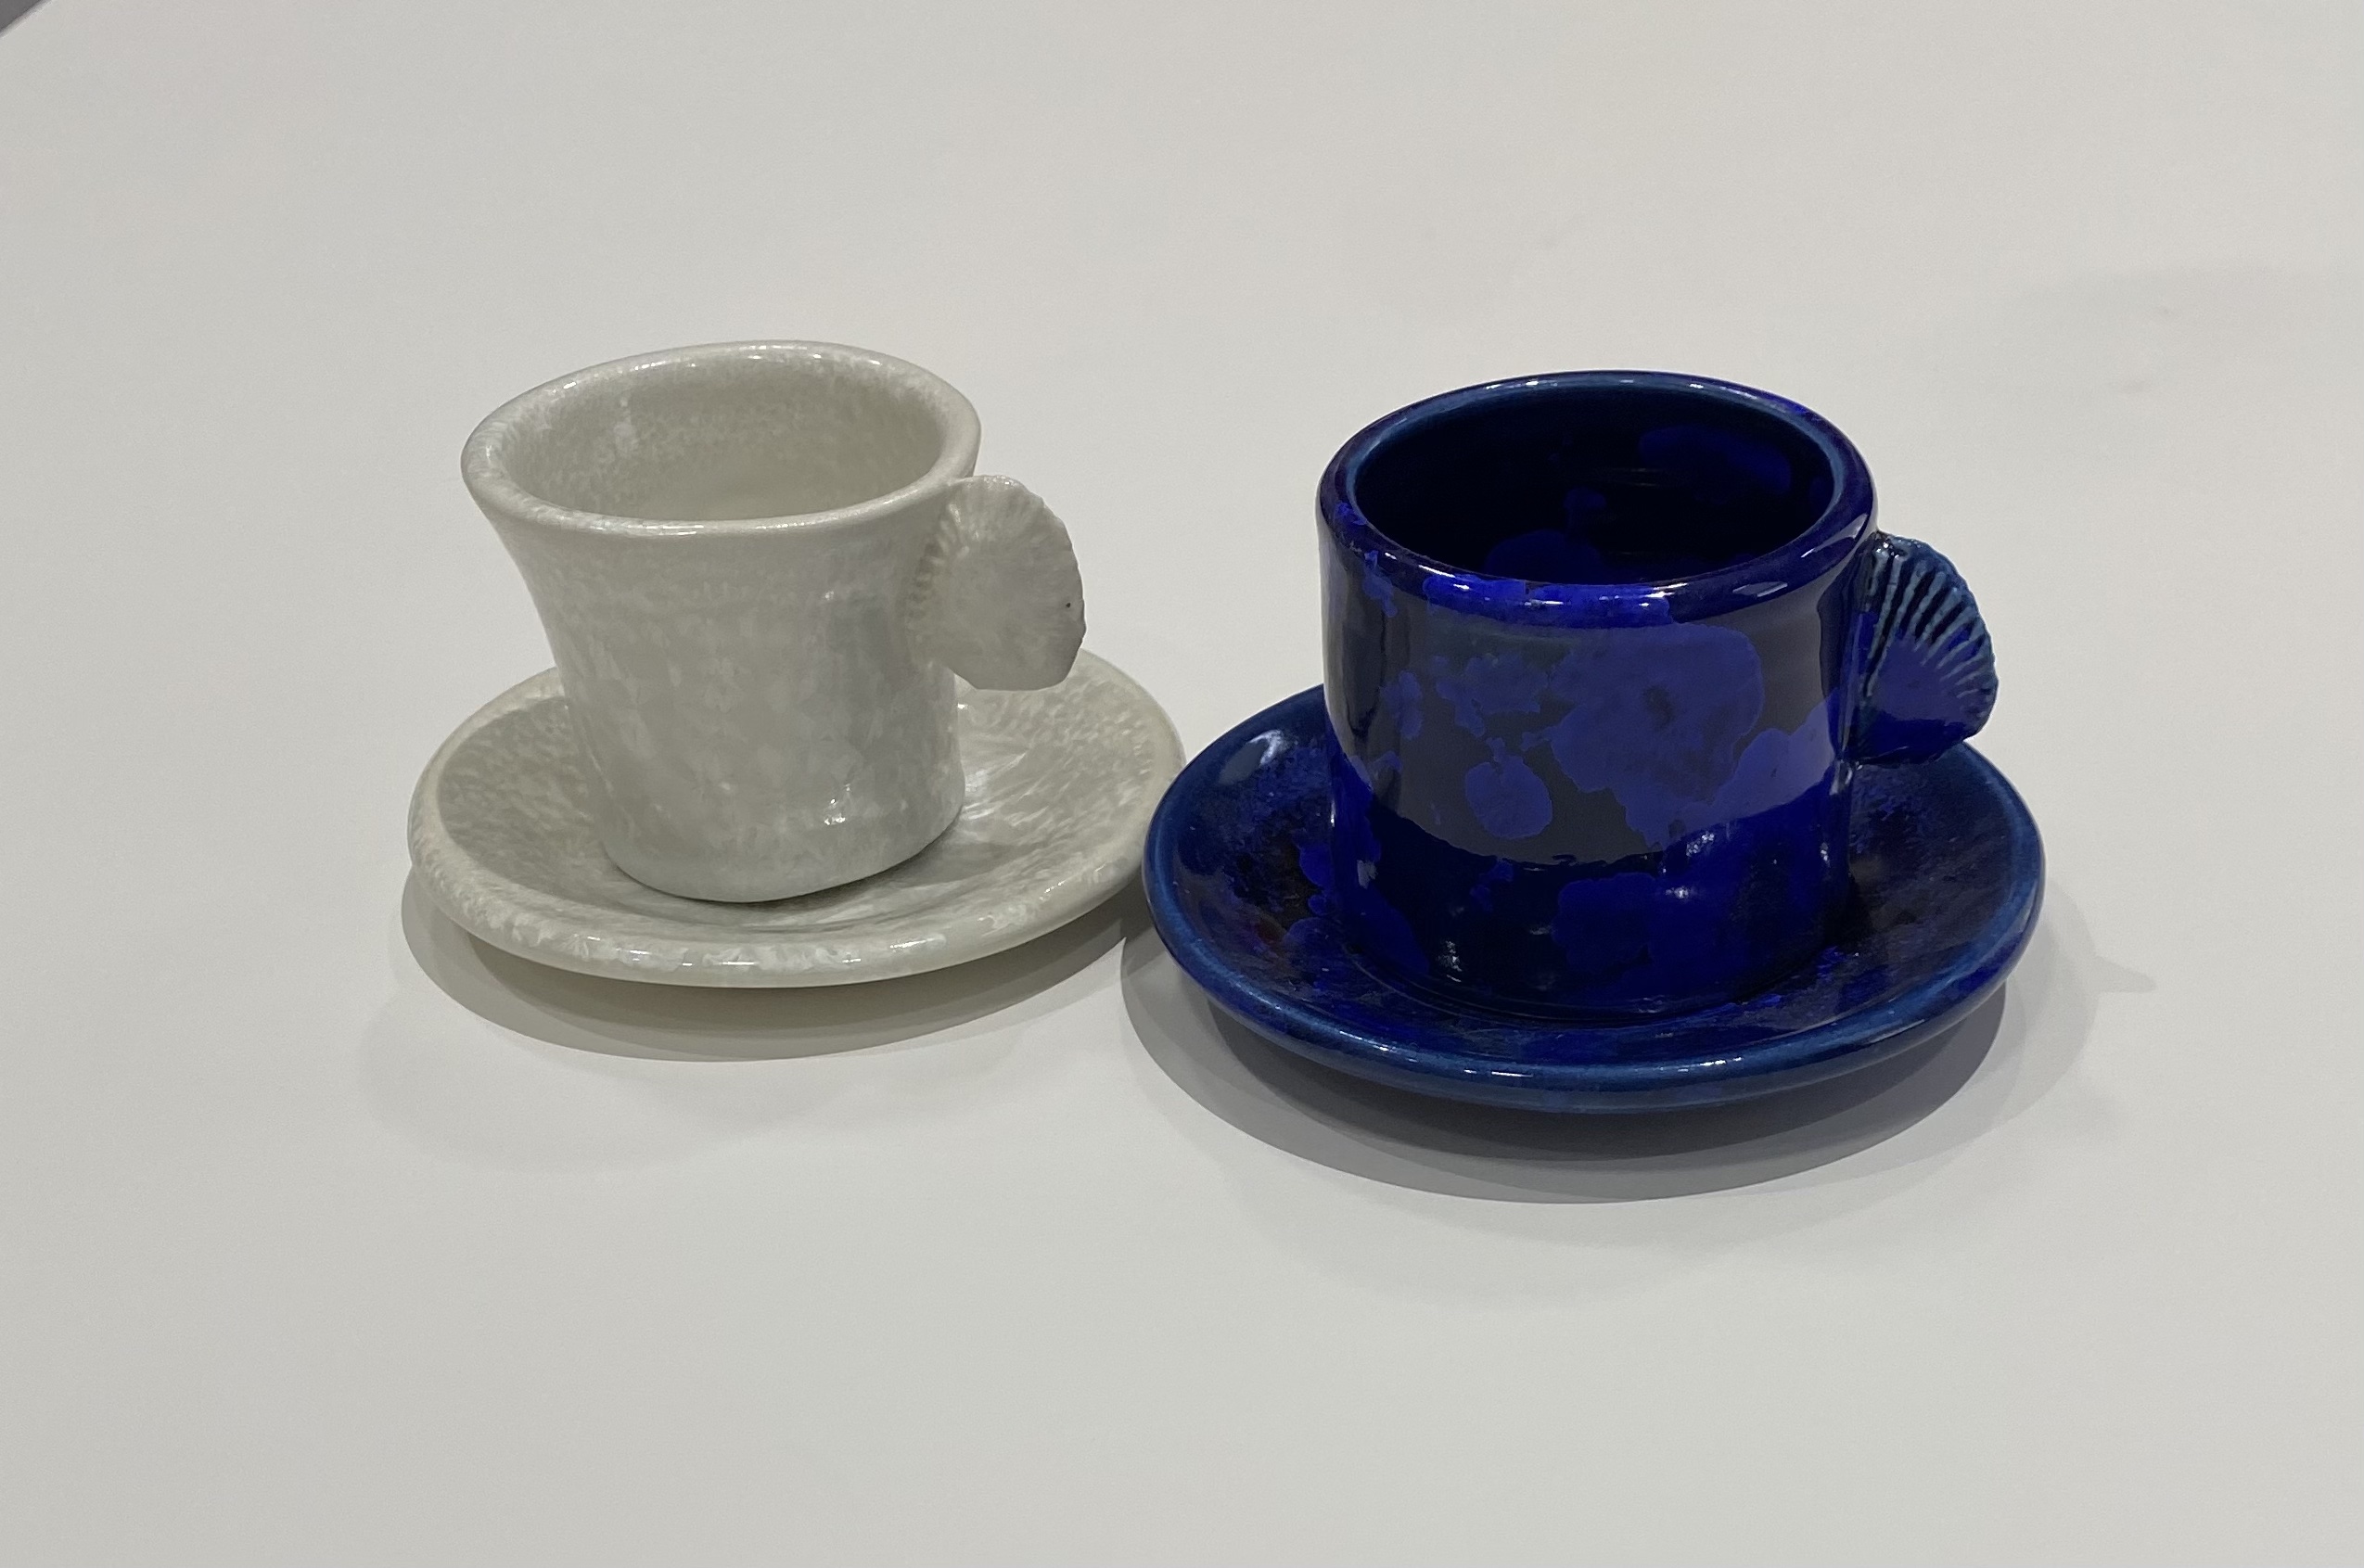 White/Blue Expresso Cups
Ceramic
2.5"
$20.